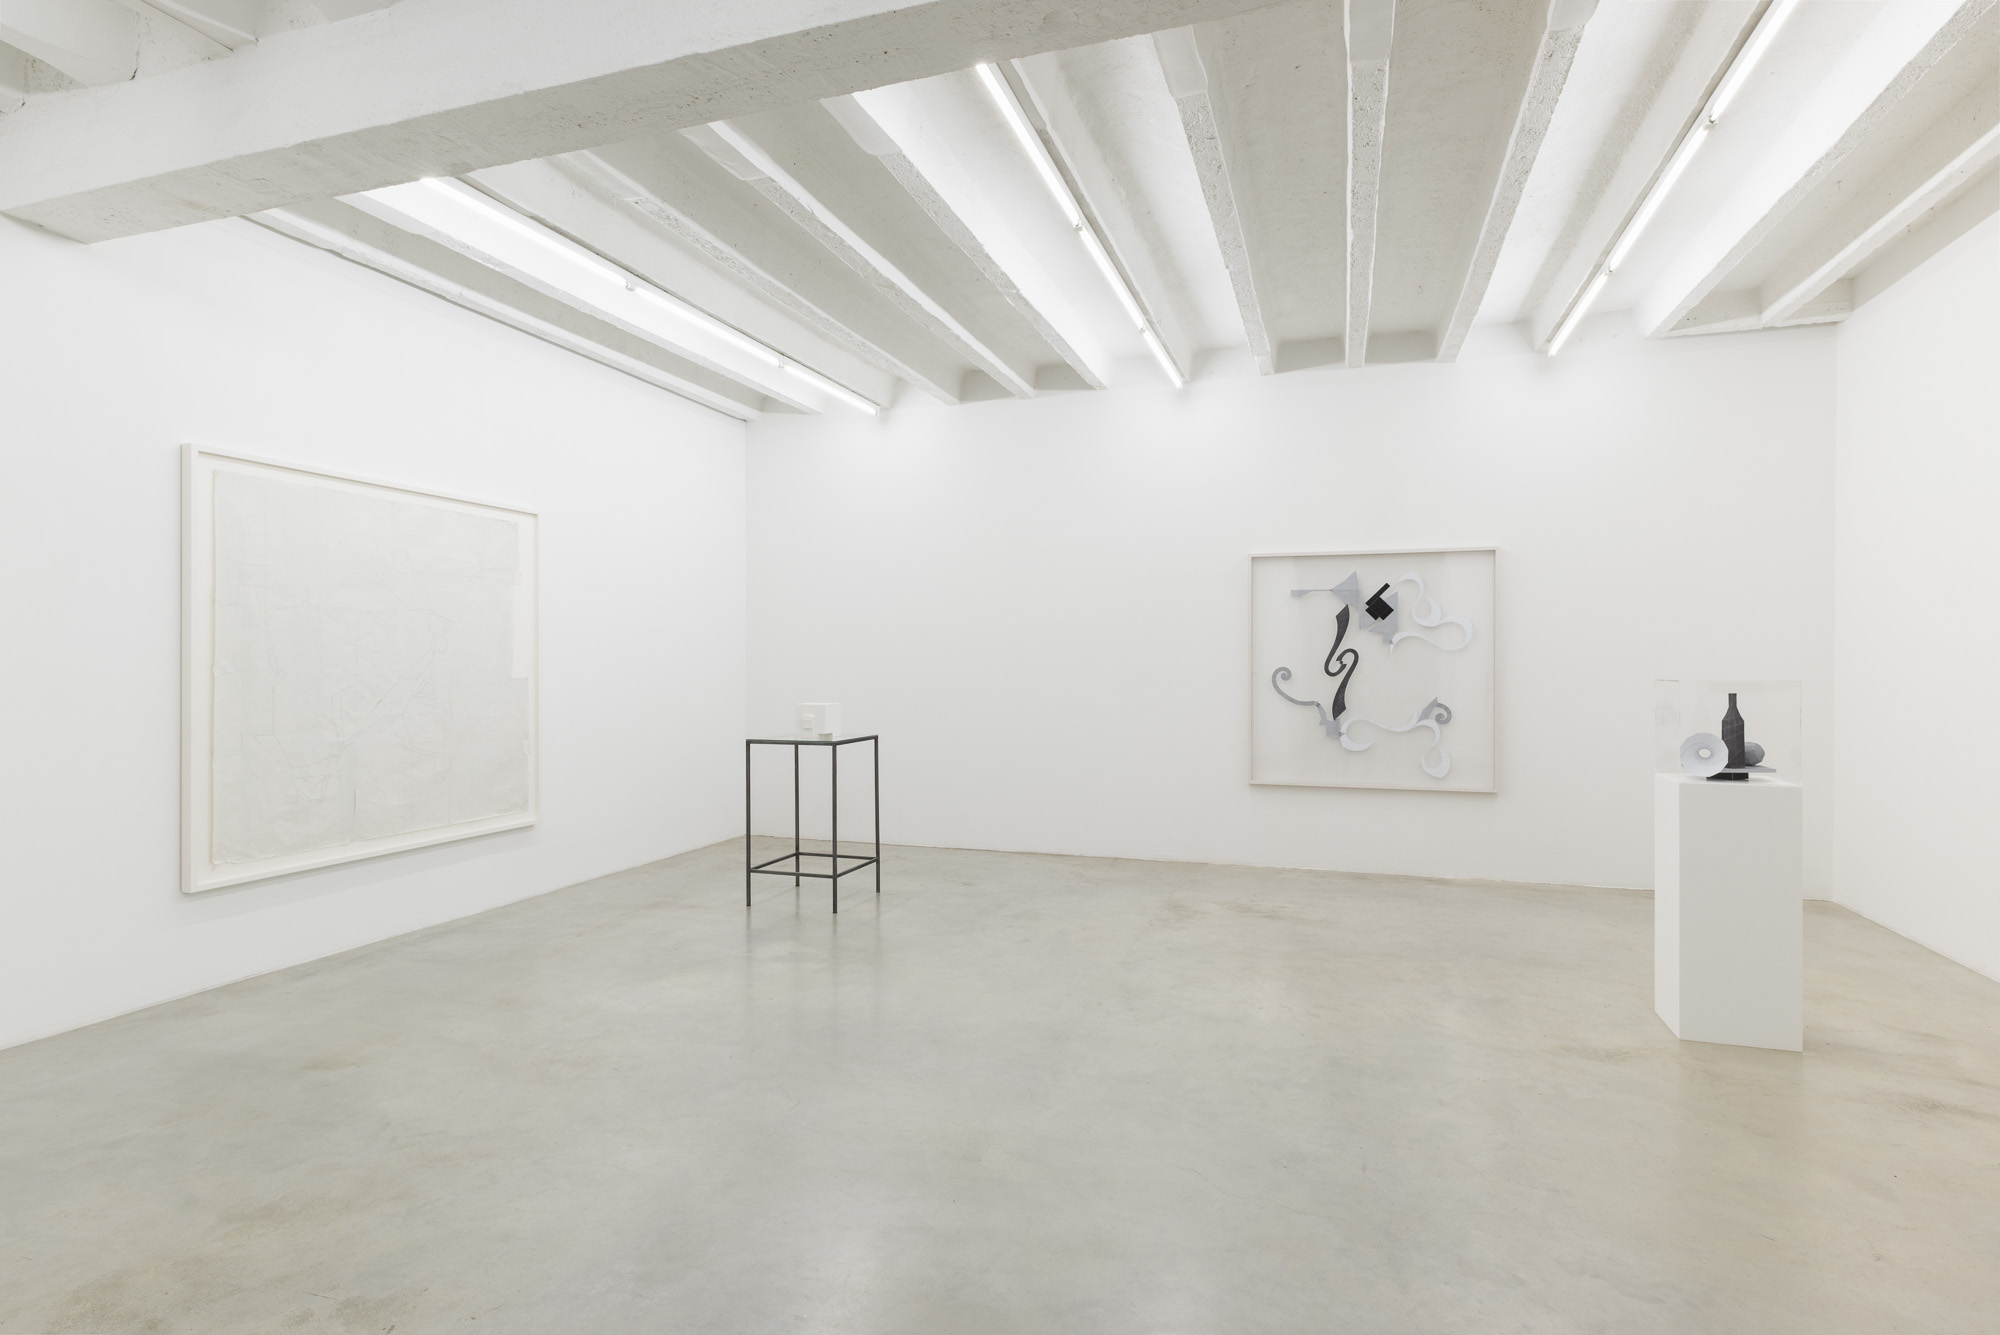 Attila Csörgő, Ursuppe, exhibition view, Gregor Podnar, Berlin, 2018. Photo: Marcus Schneider